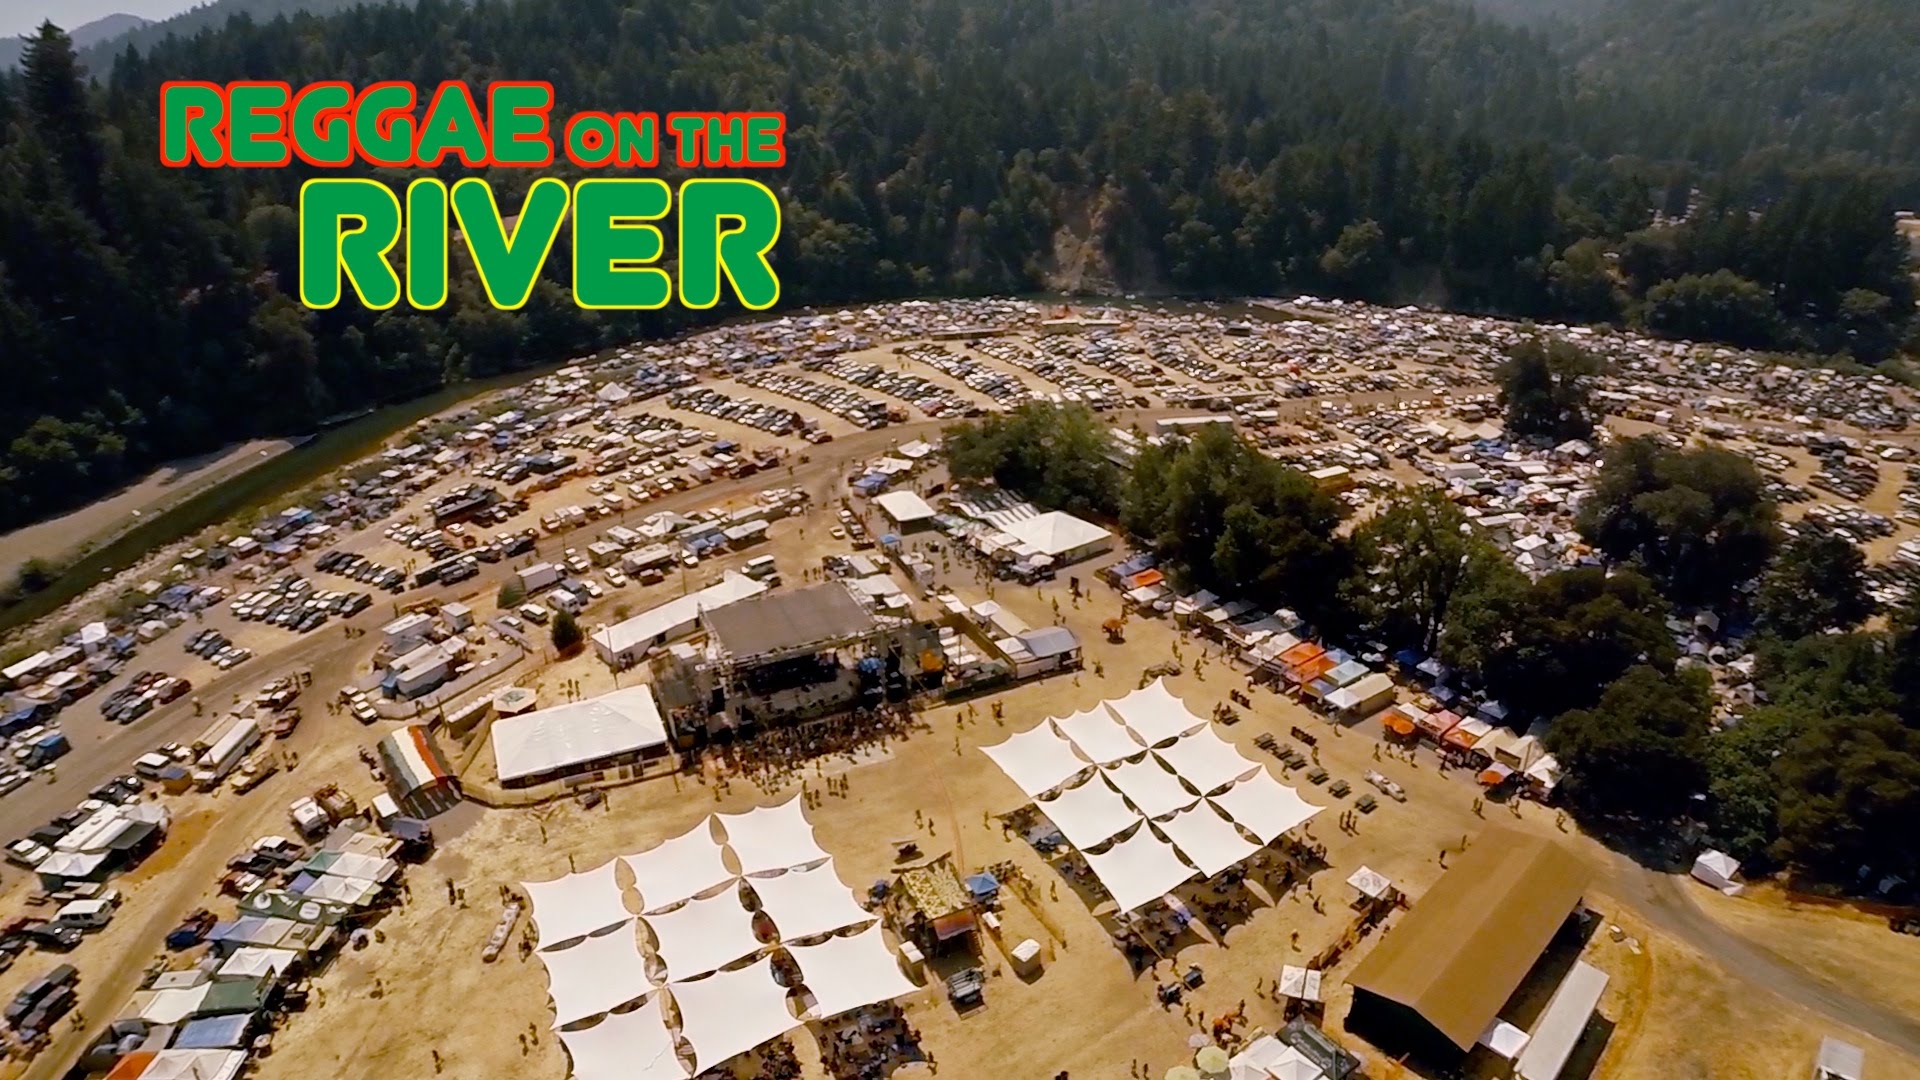 Reggae on the River 2014 - Aerial Views [8/2/2014]